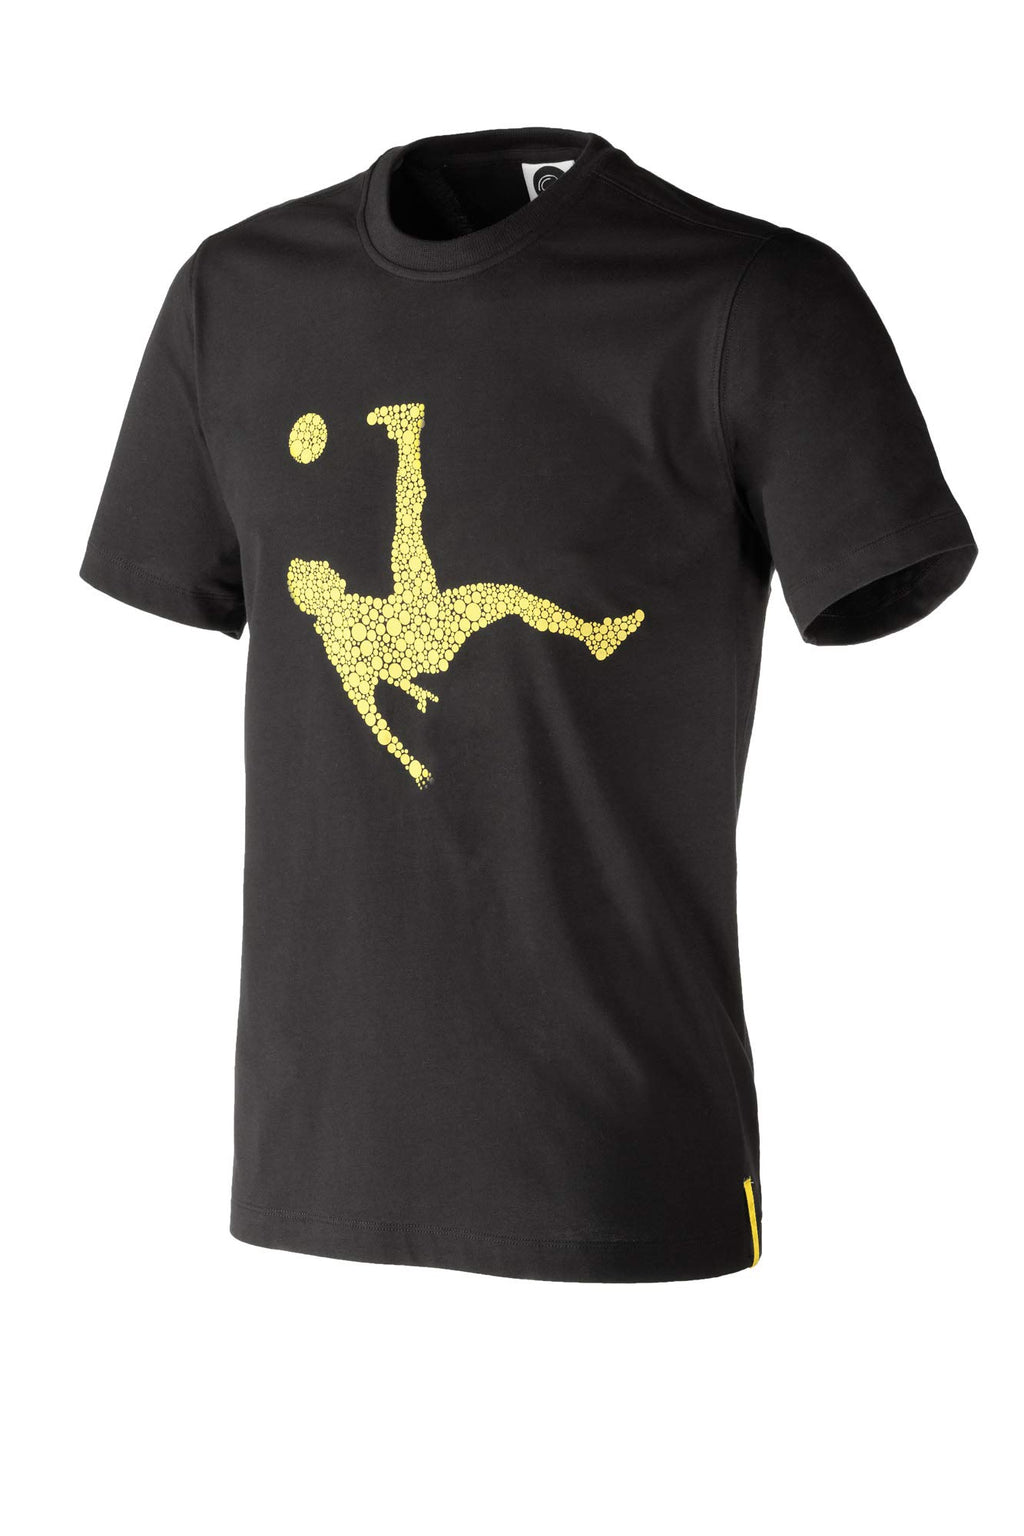 Pele Sports Men's Bike Kick T-Shirt - Black